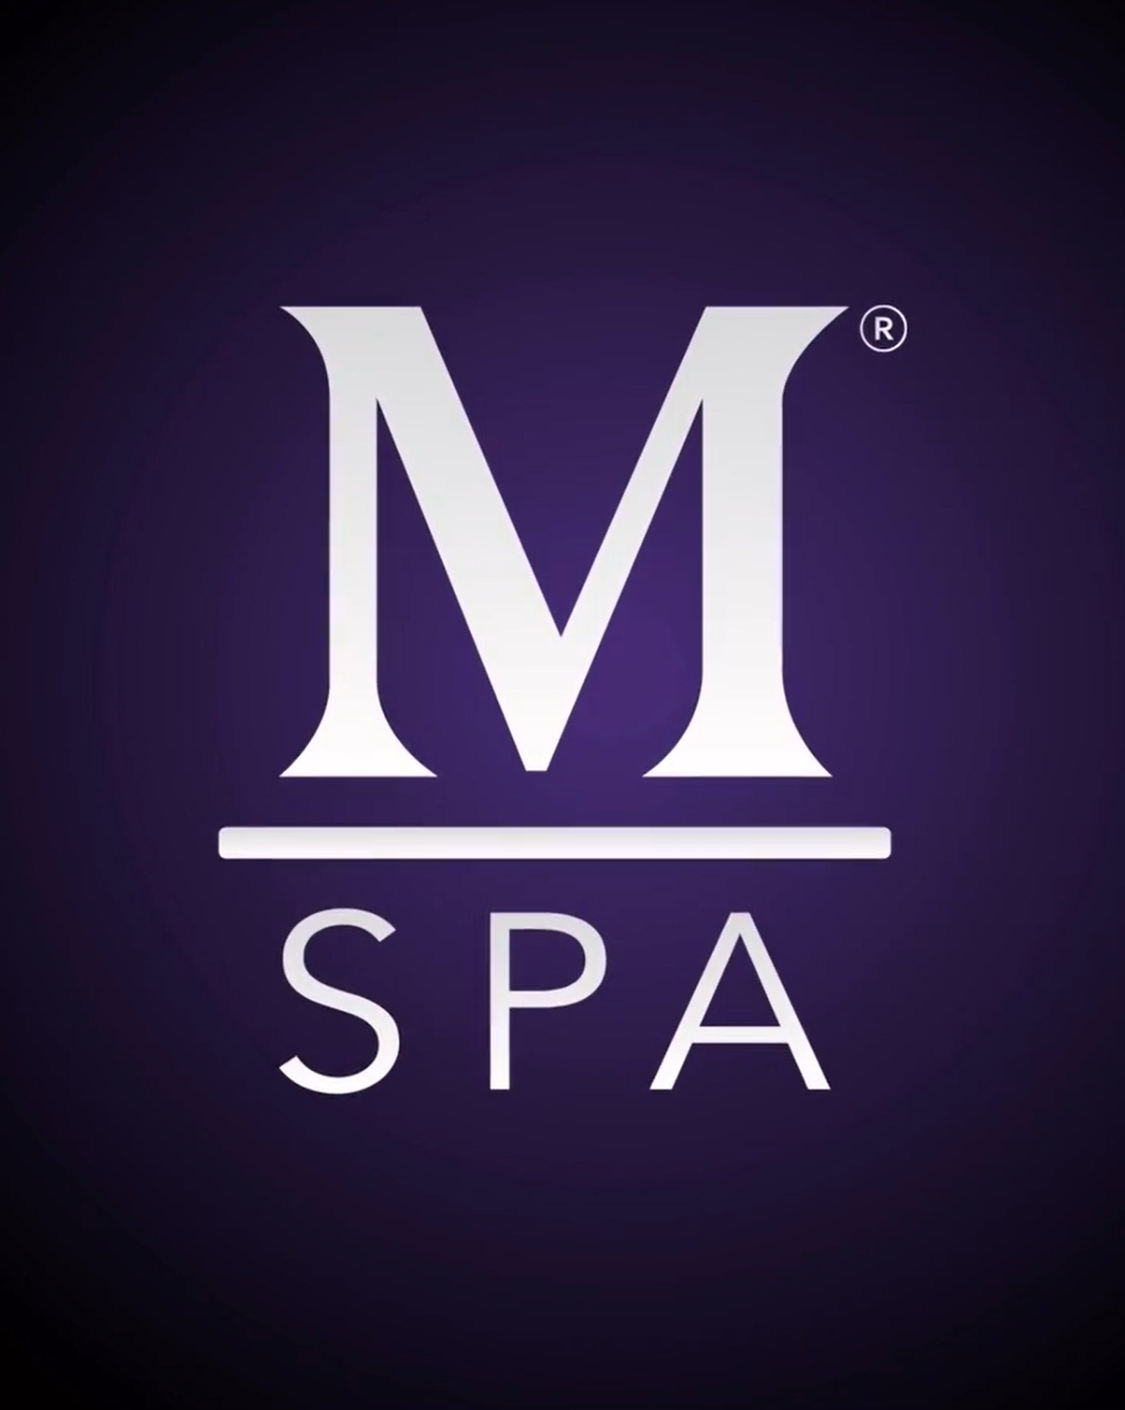 M Spa logo on purple background